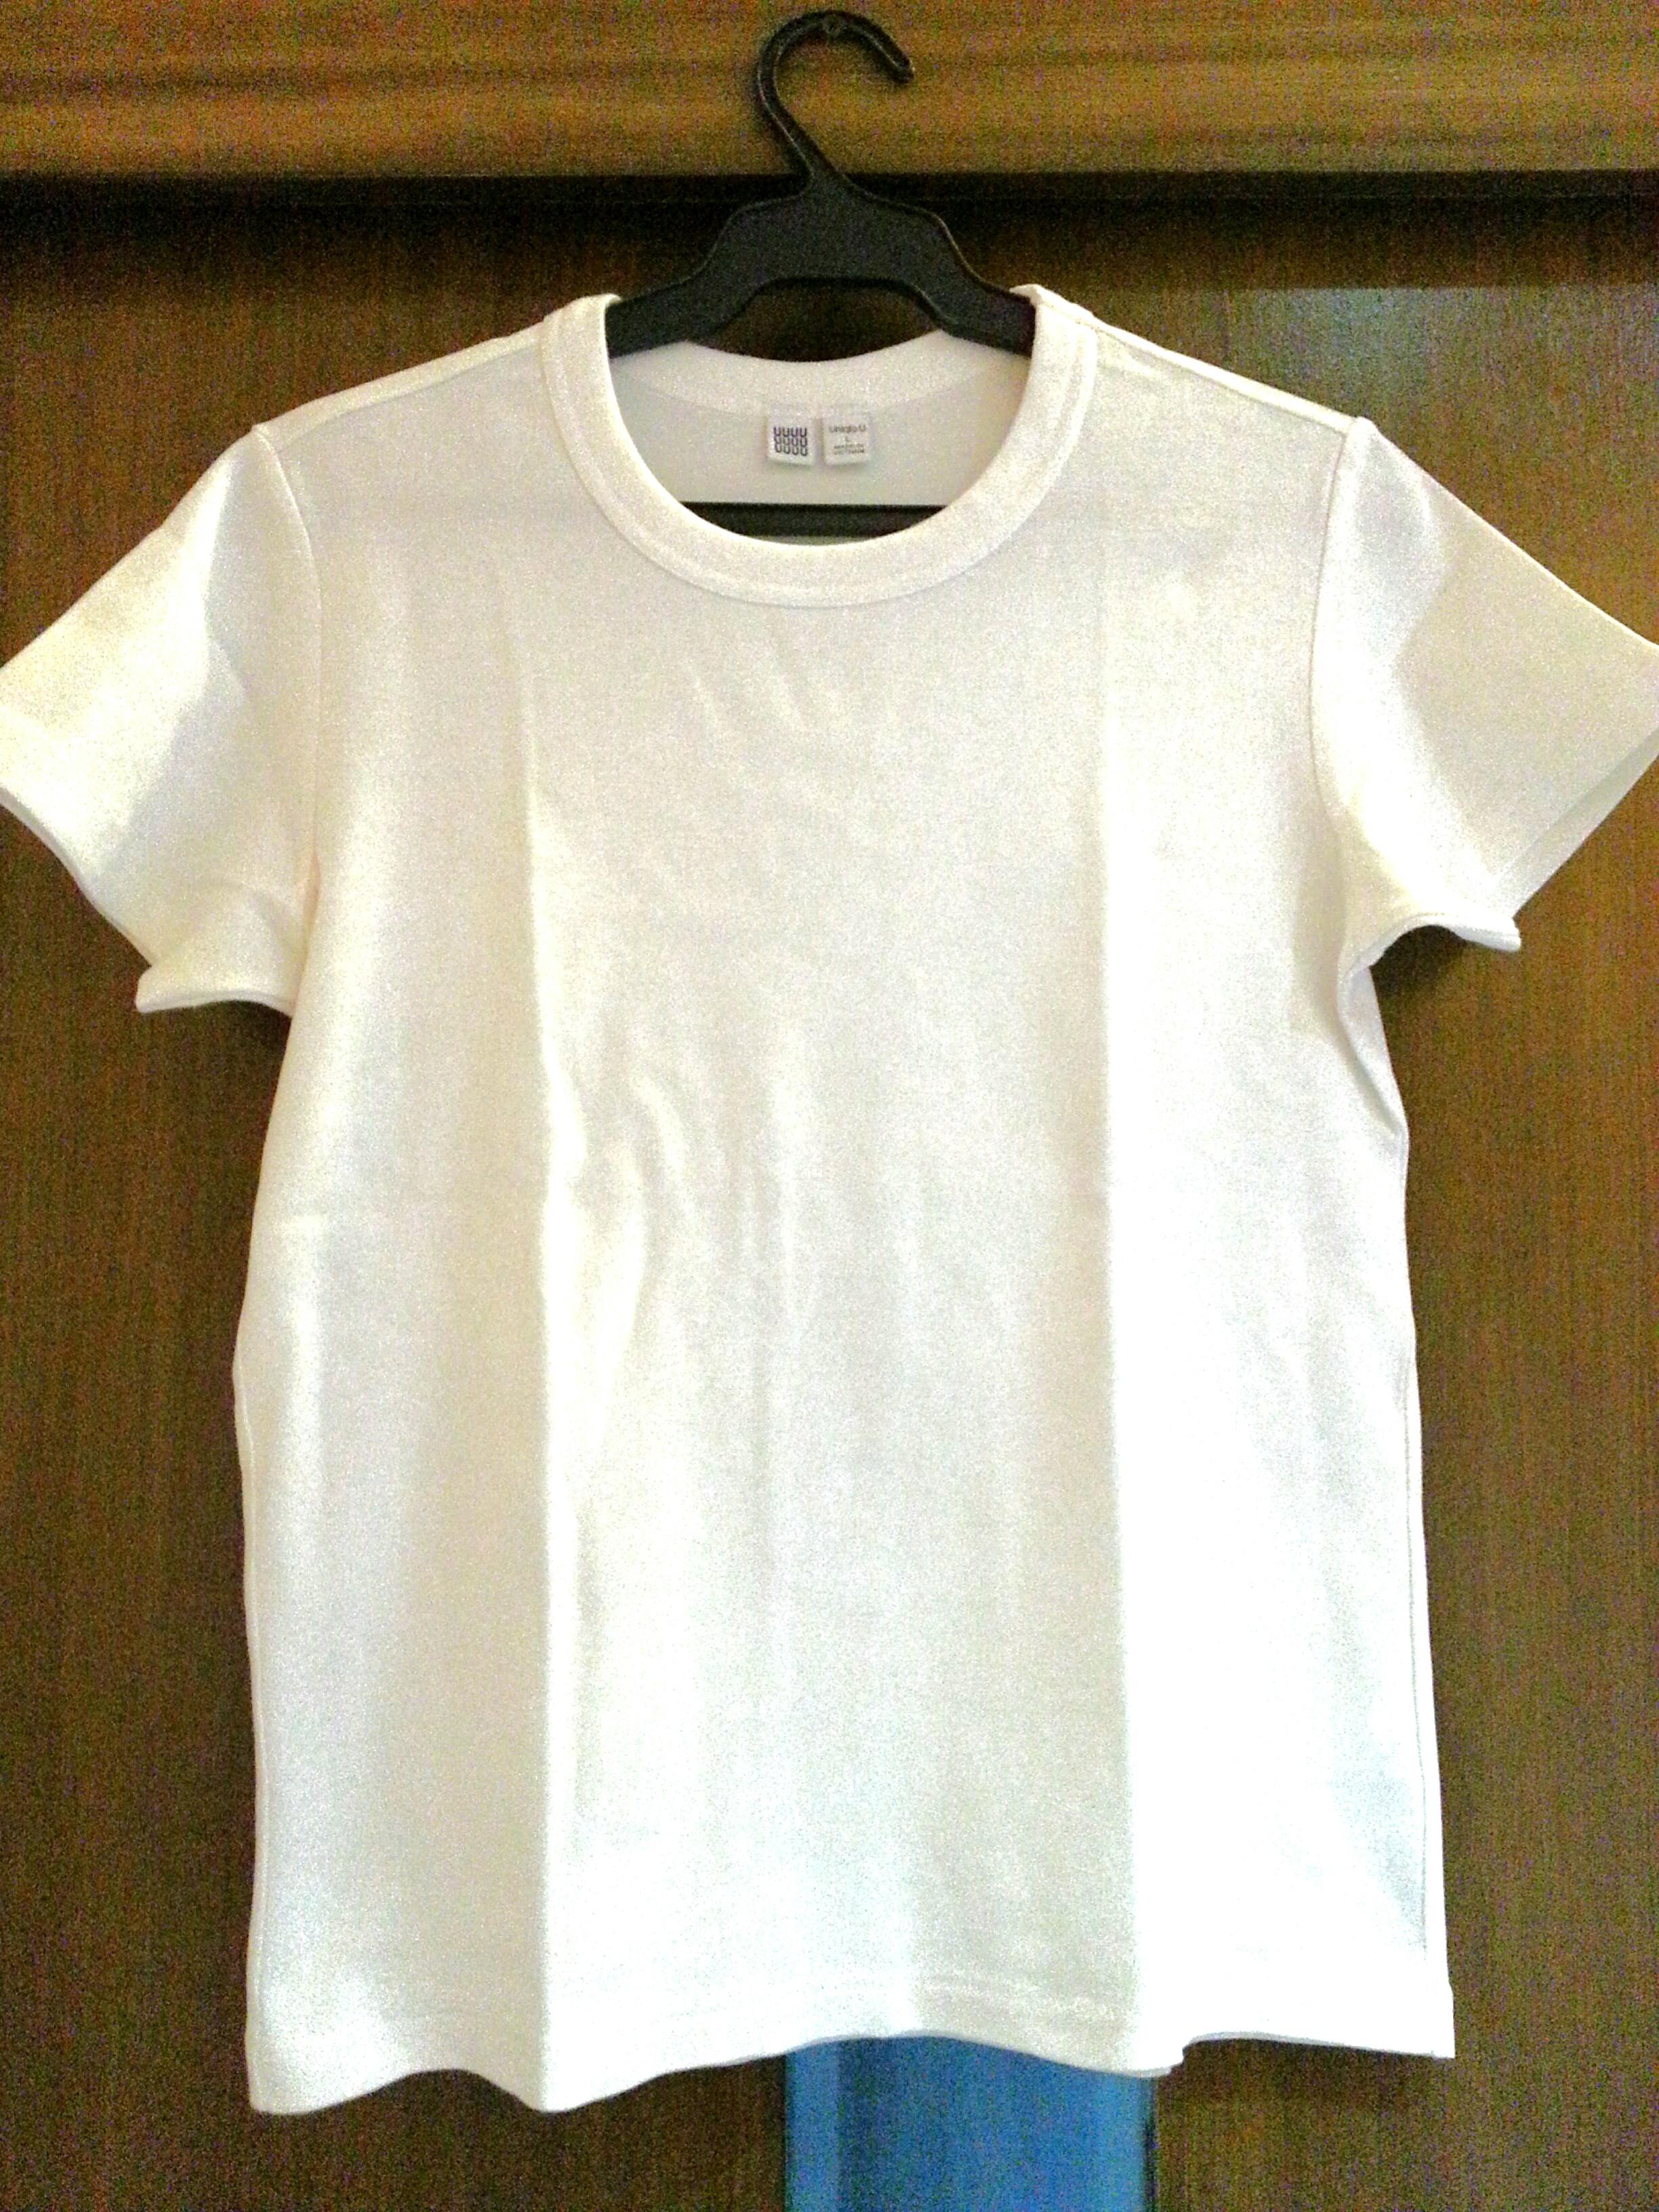 Uniqlo Plain White shirt Womens Fashion Tops Shirts on Carousell